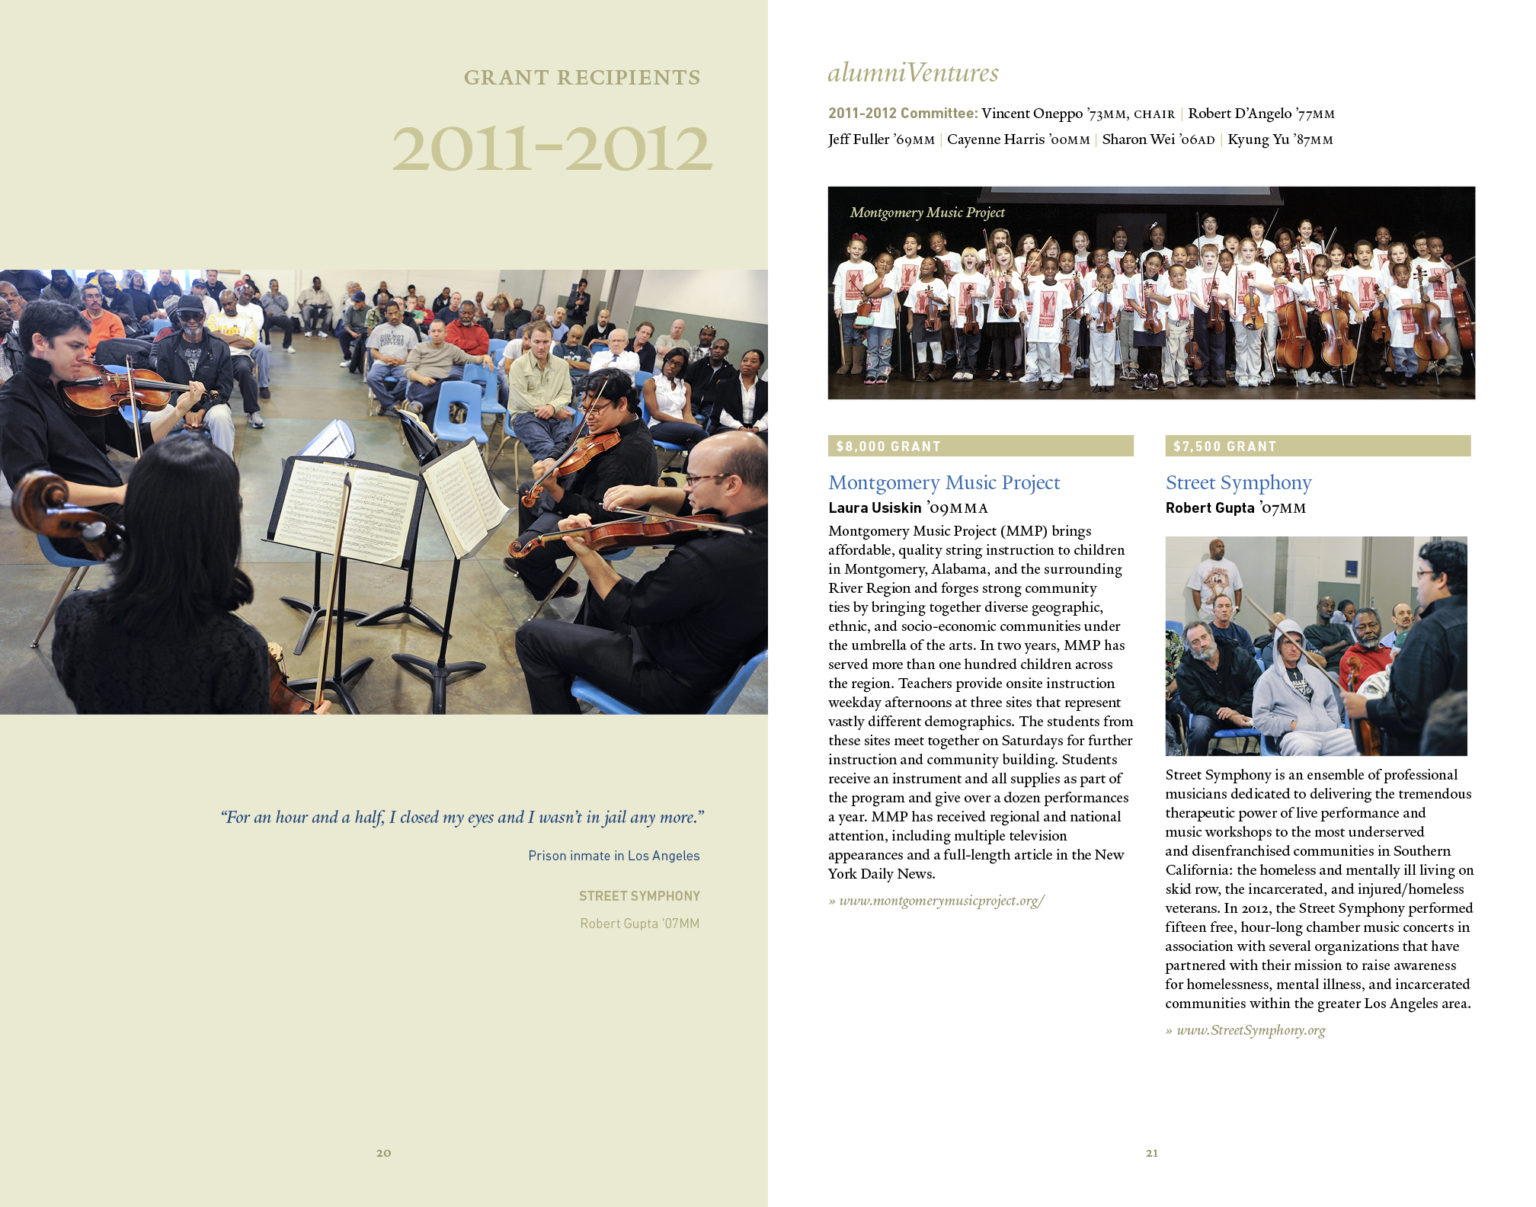 Yale University “Alumni Ventures” Anniversary Booklet